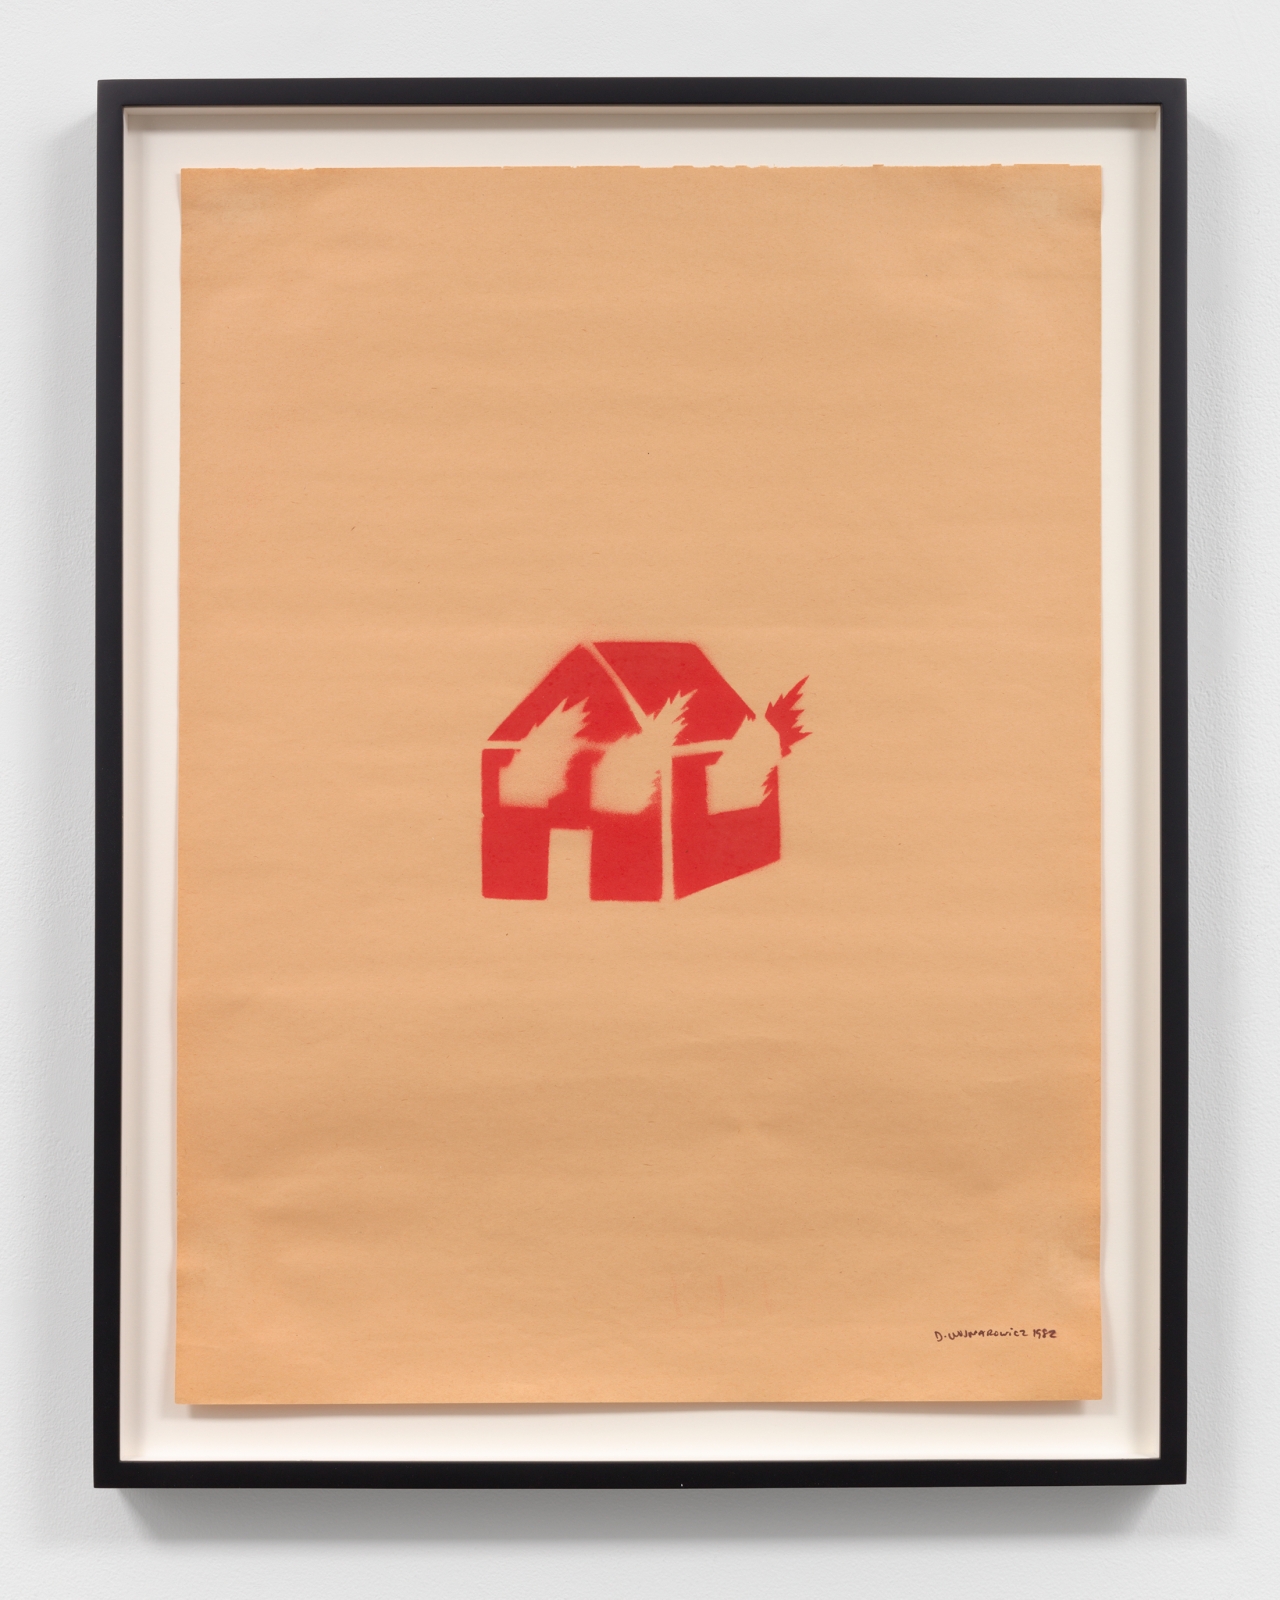 David Wojnarowicz
Untitled (Burning House), 1982
stencil on paper
24 x 18 ins.
61 x 45.7 cm